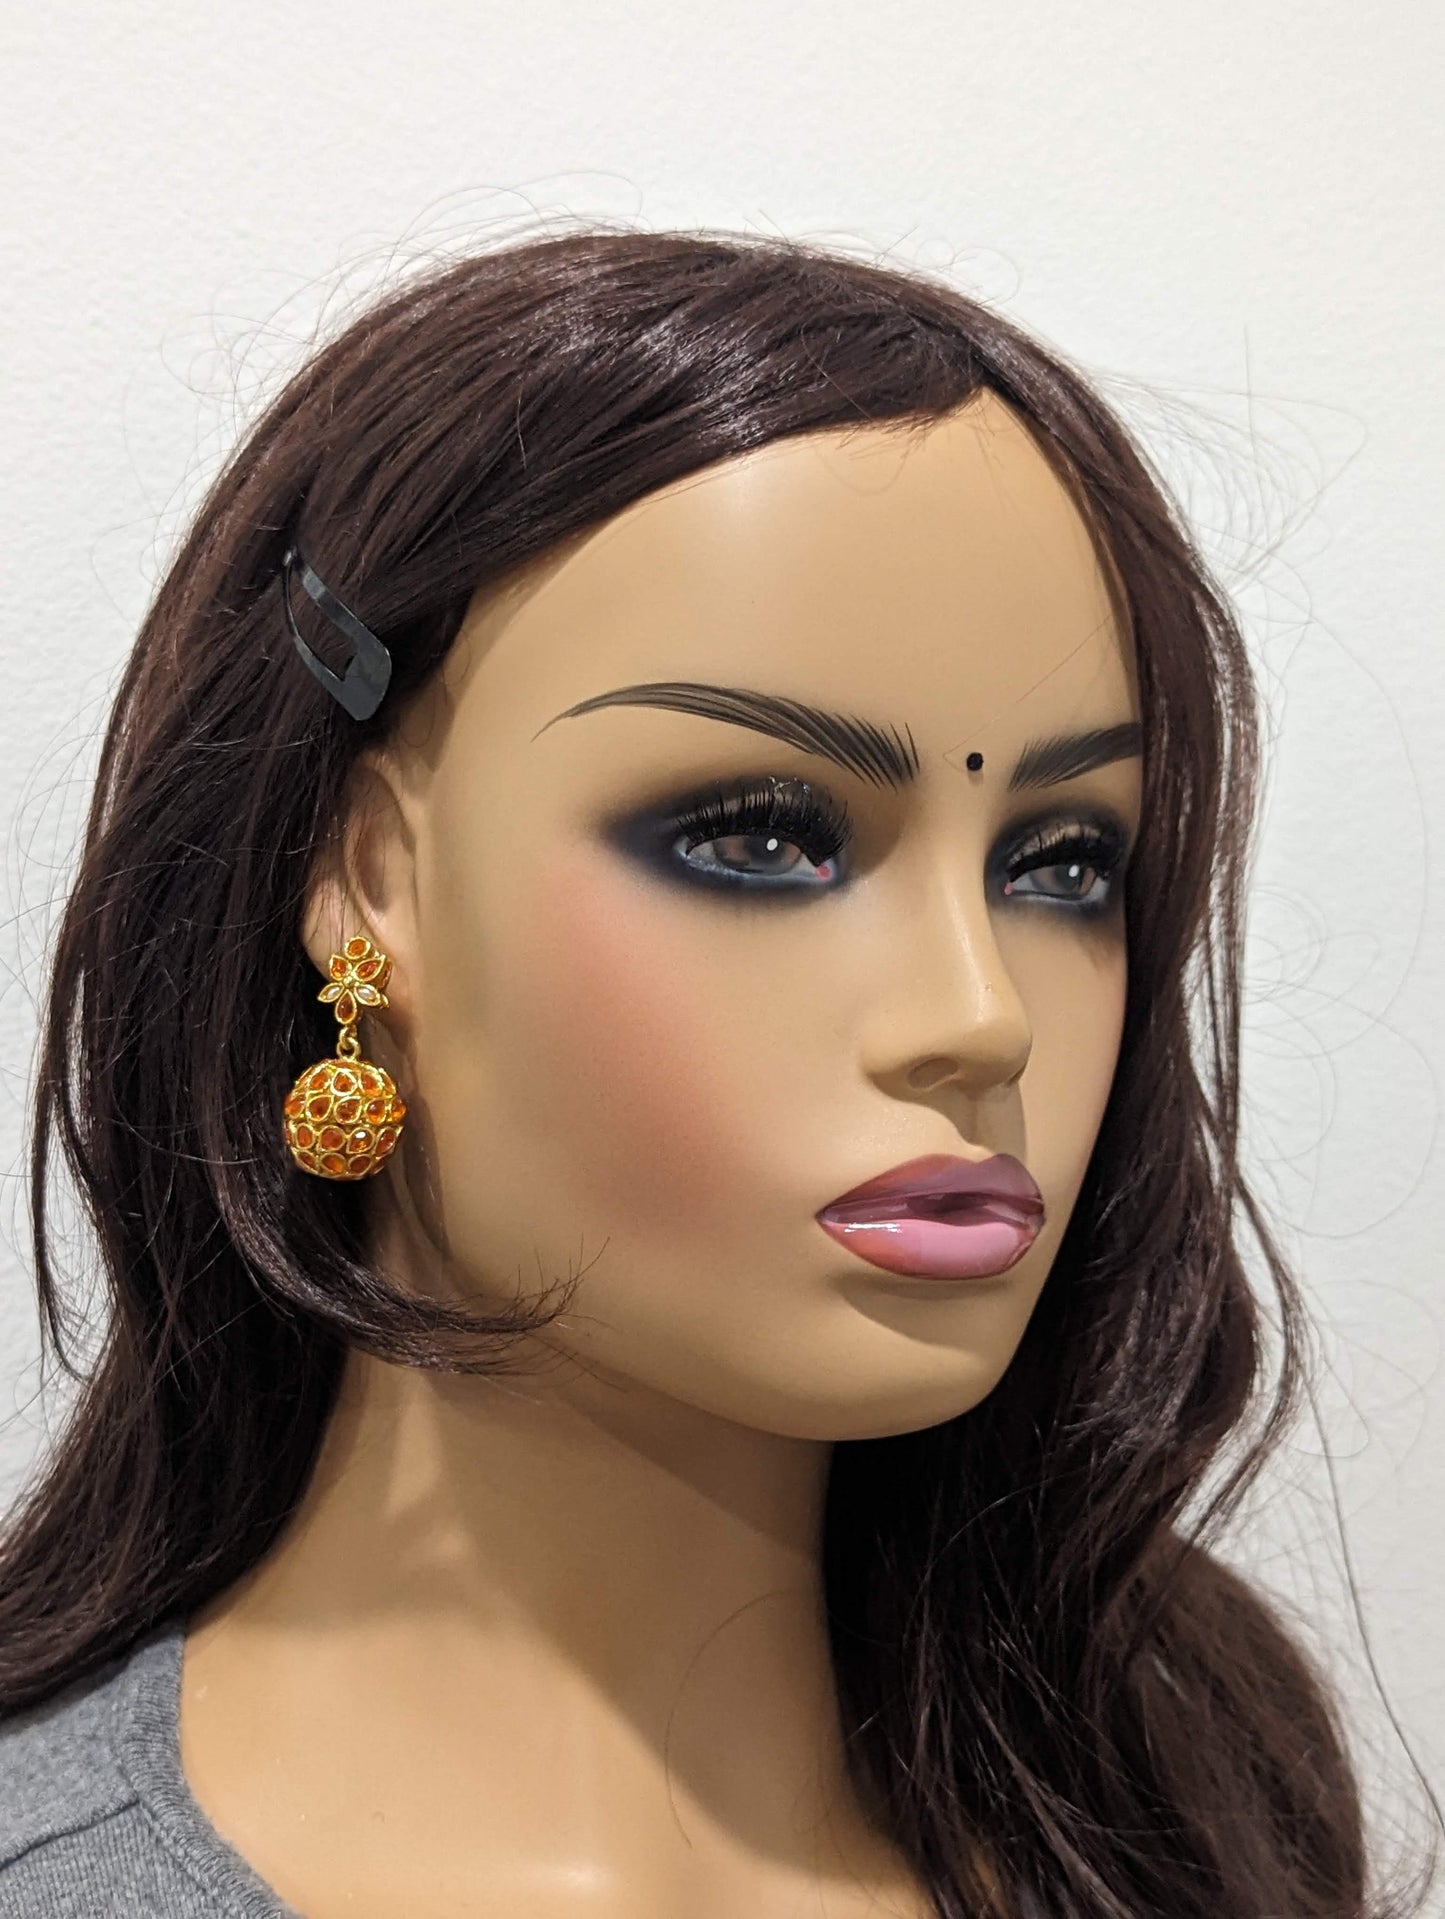 Gold plated ball jhumka earrings